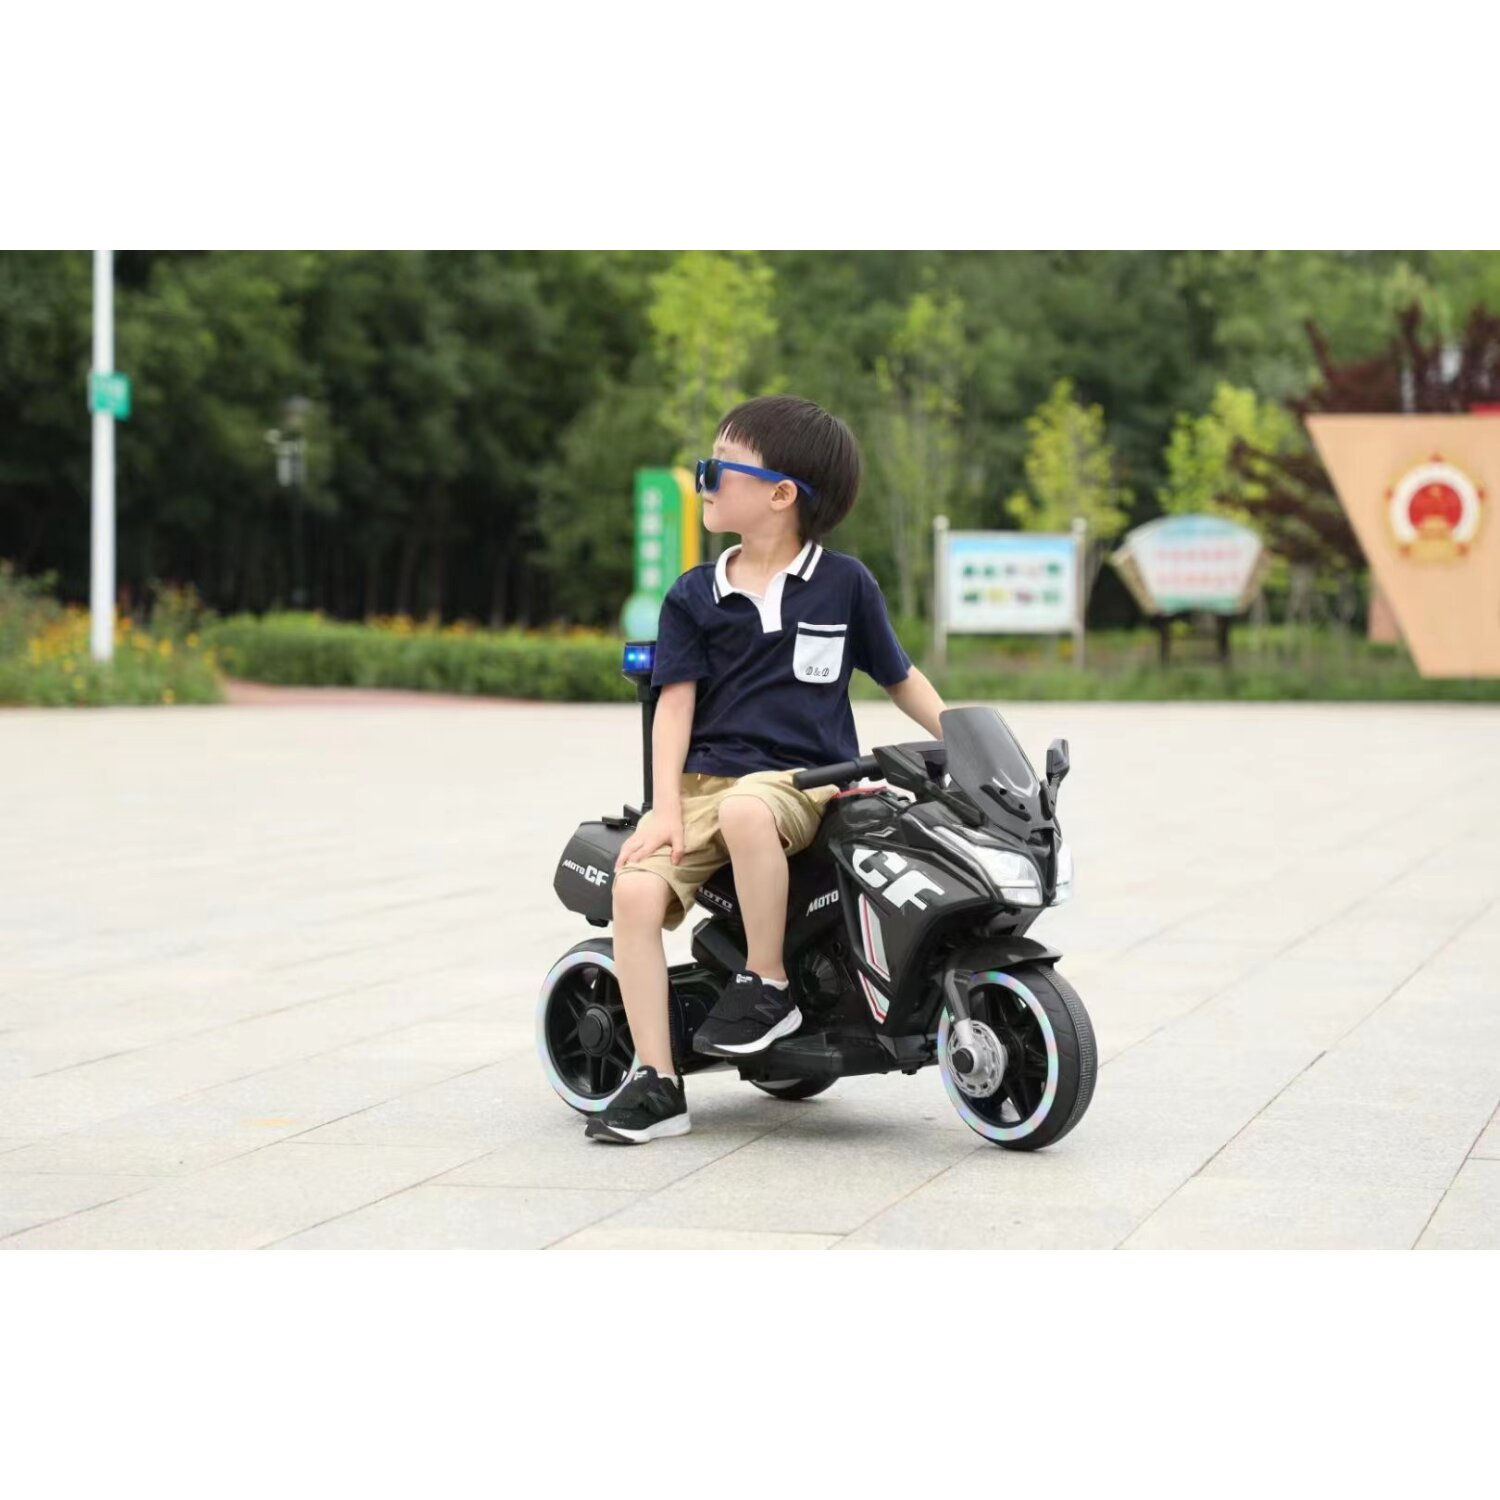 Kinder Kinderfahrzeug COFI Elektro-Motorrad